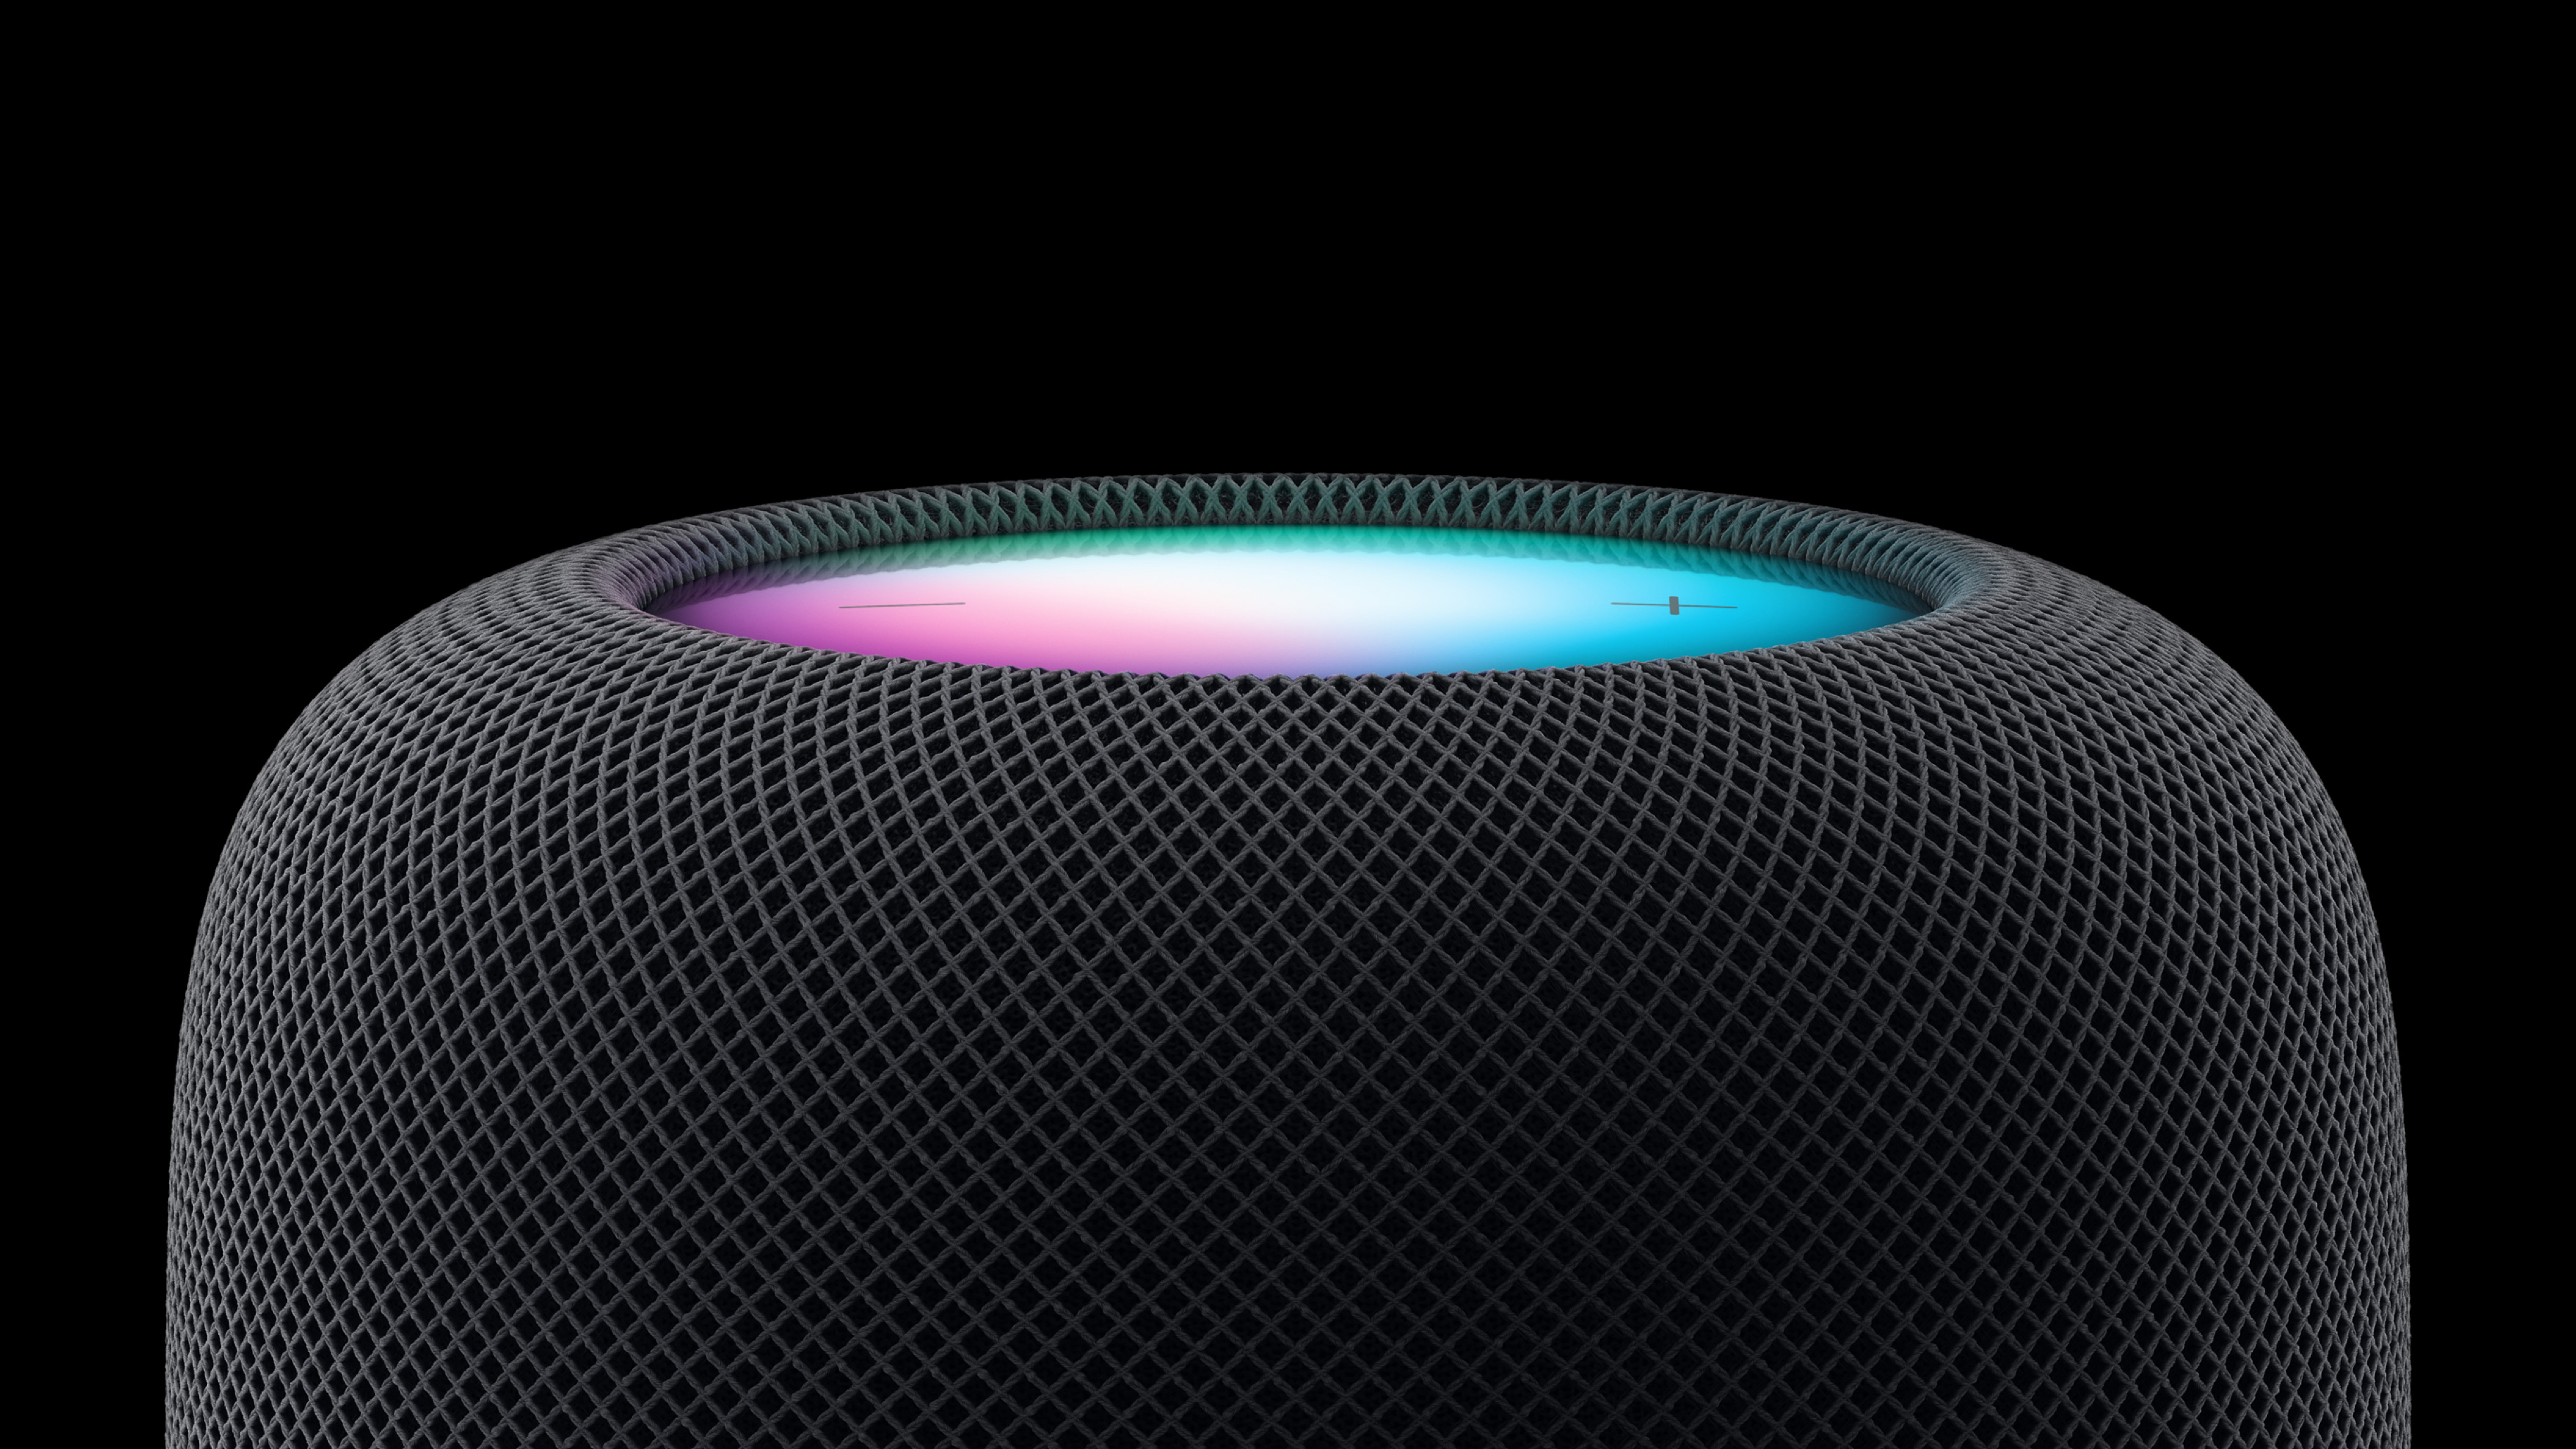 The Apple HomePod speaker on a black background